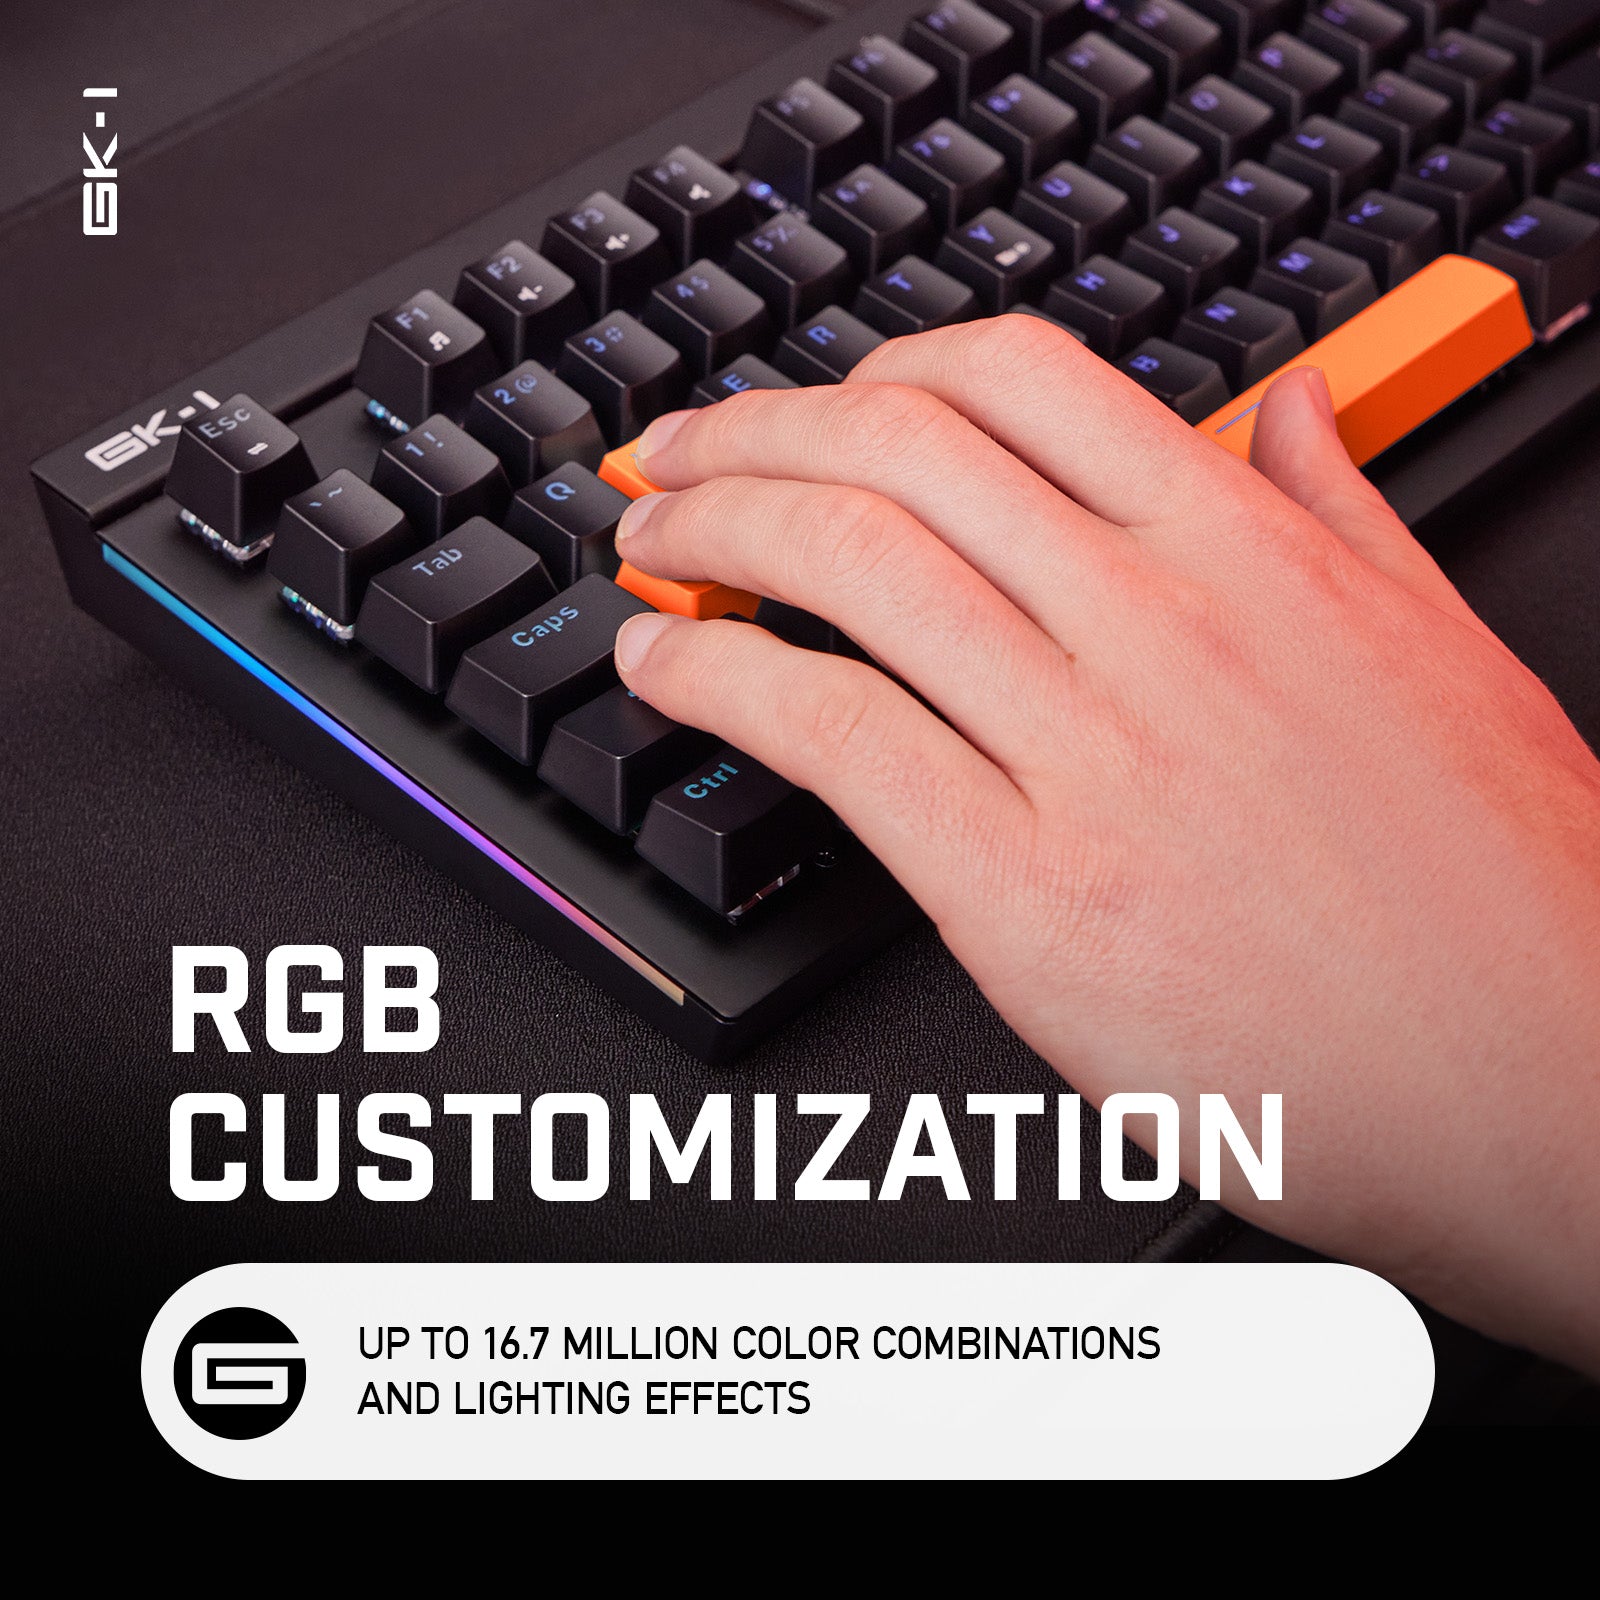 GK-1 RGB GAMING KEYBOARD - Launch Edition Orange